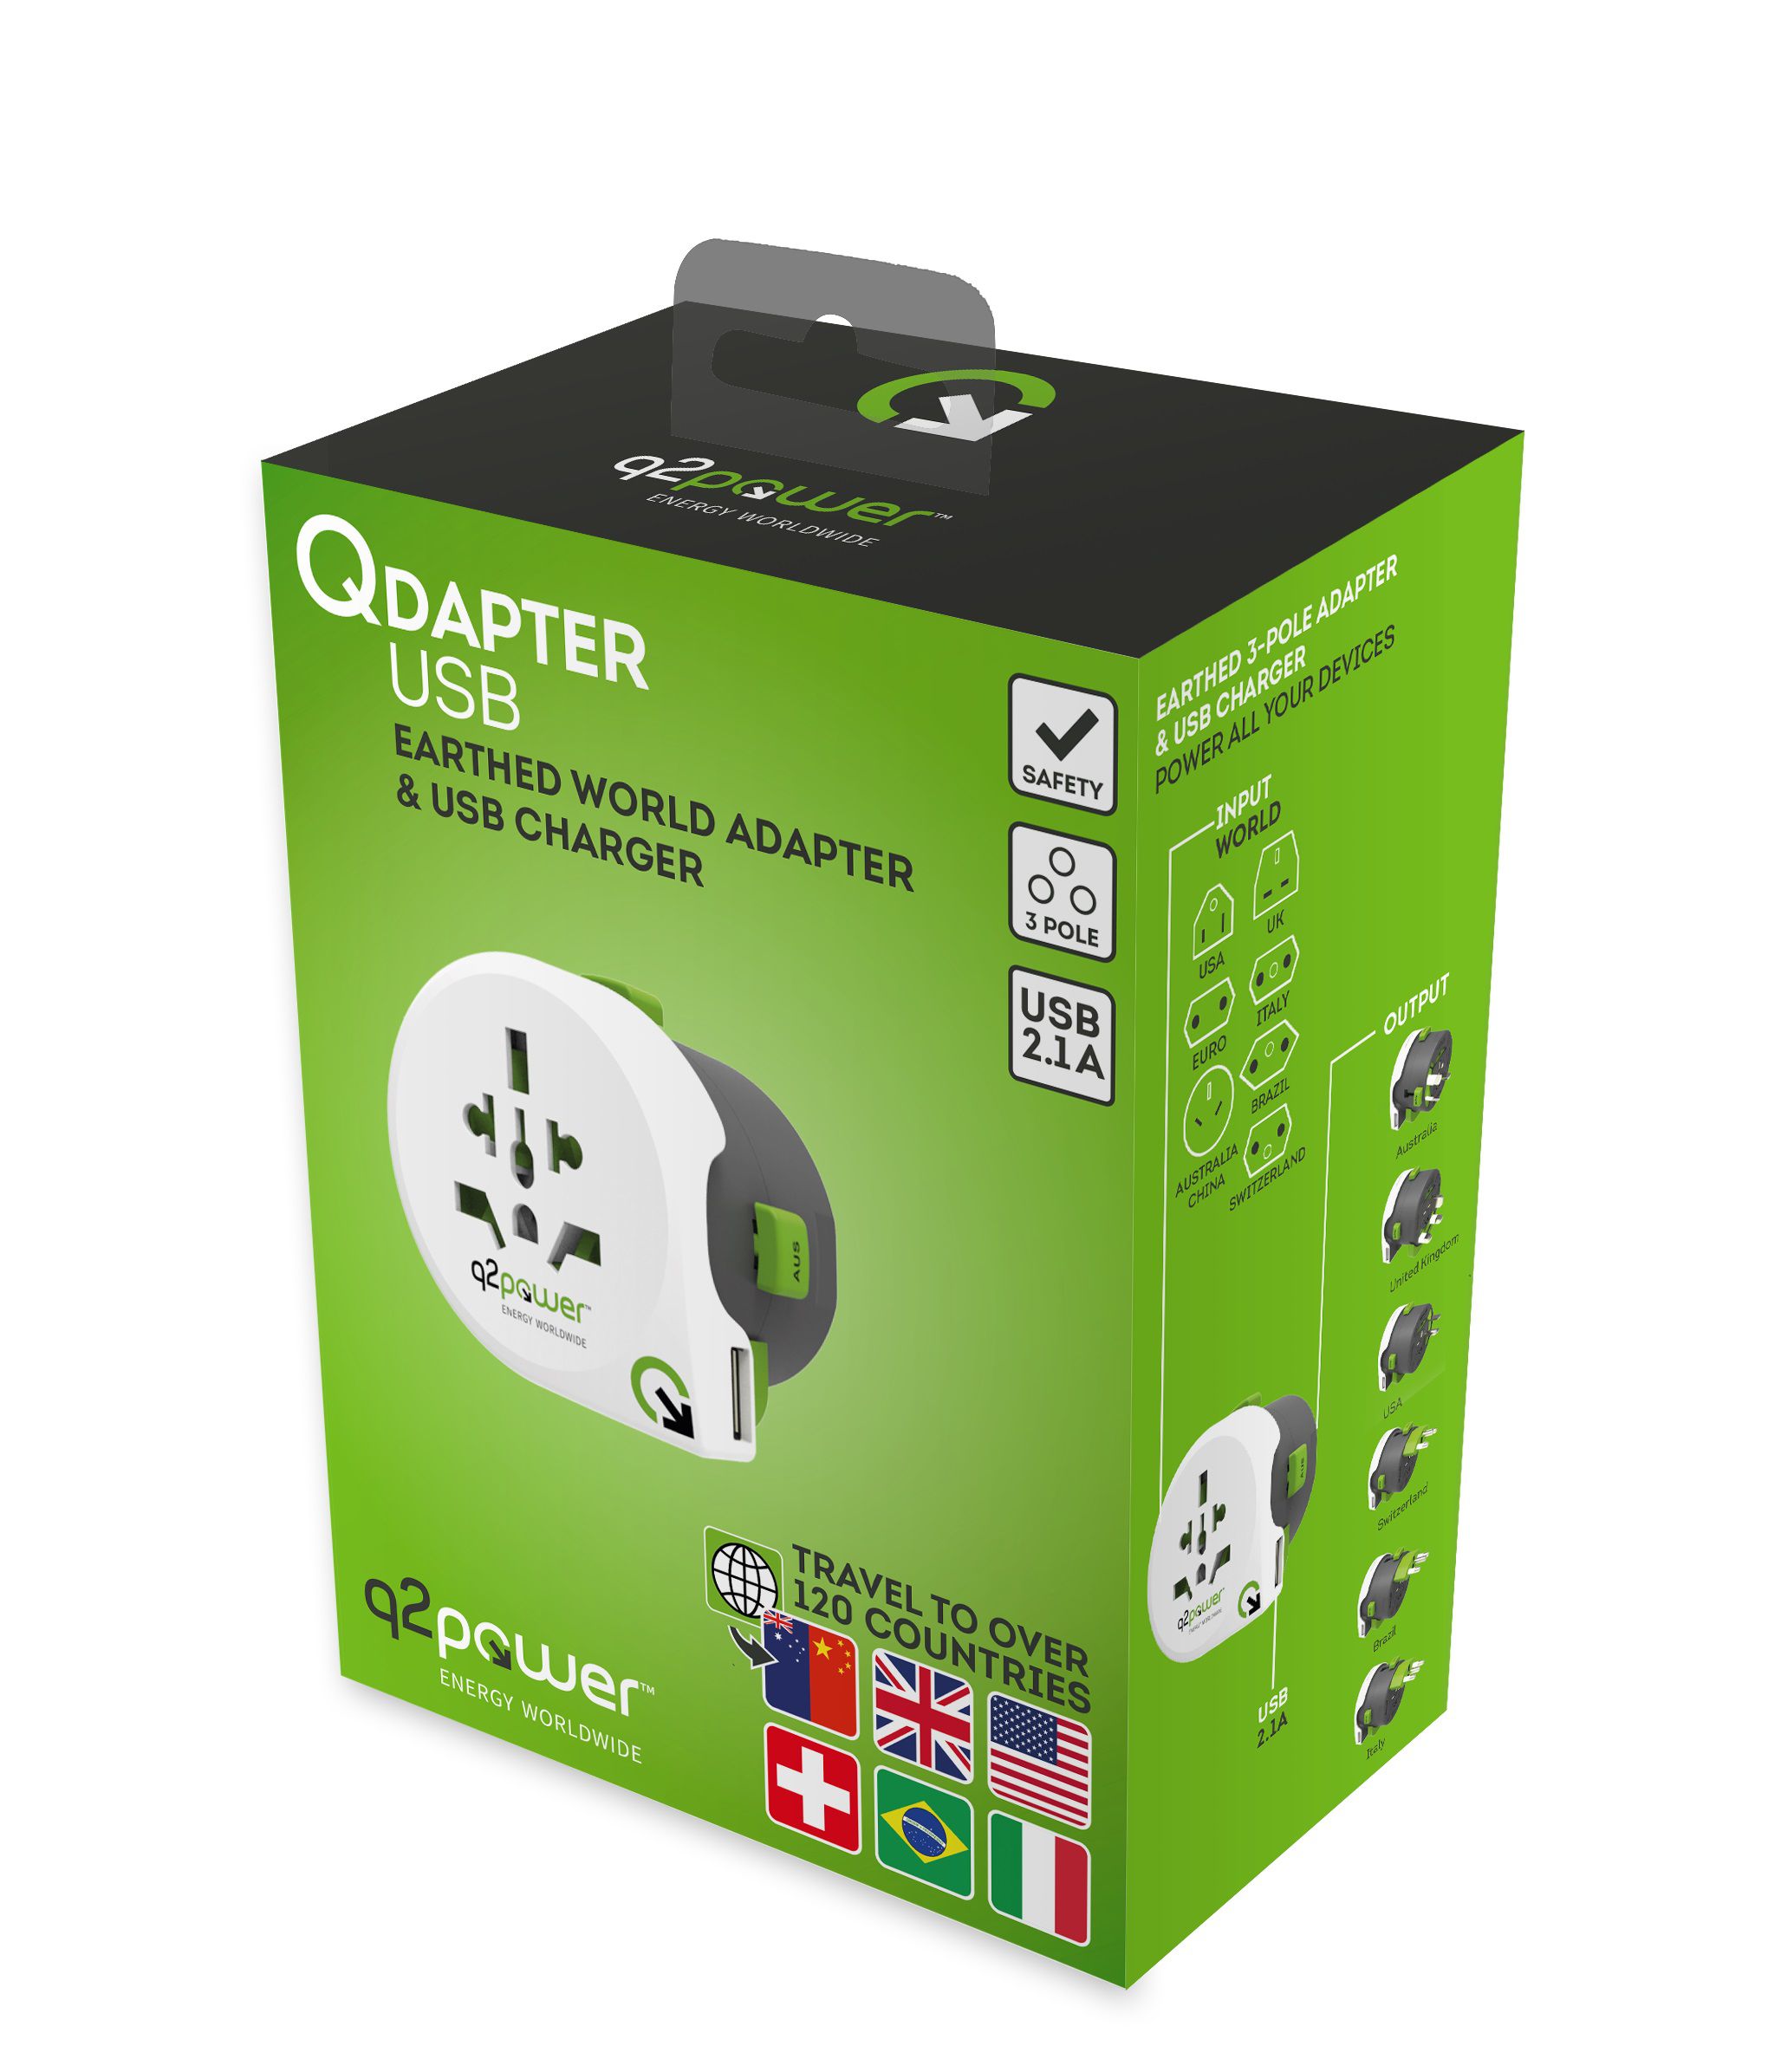 Weltreiseadapter "QDAPTER" mit USB 2.1A